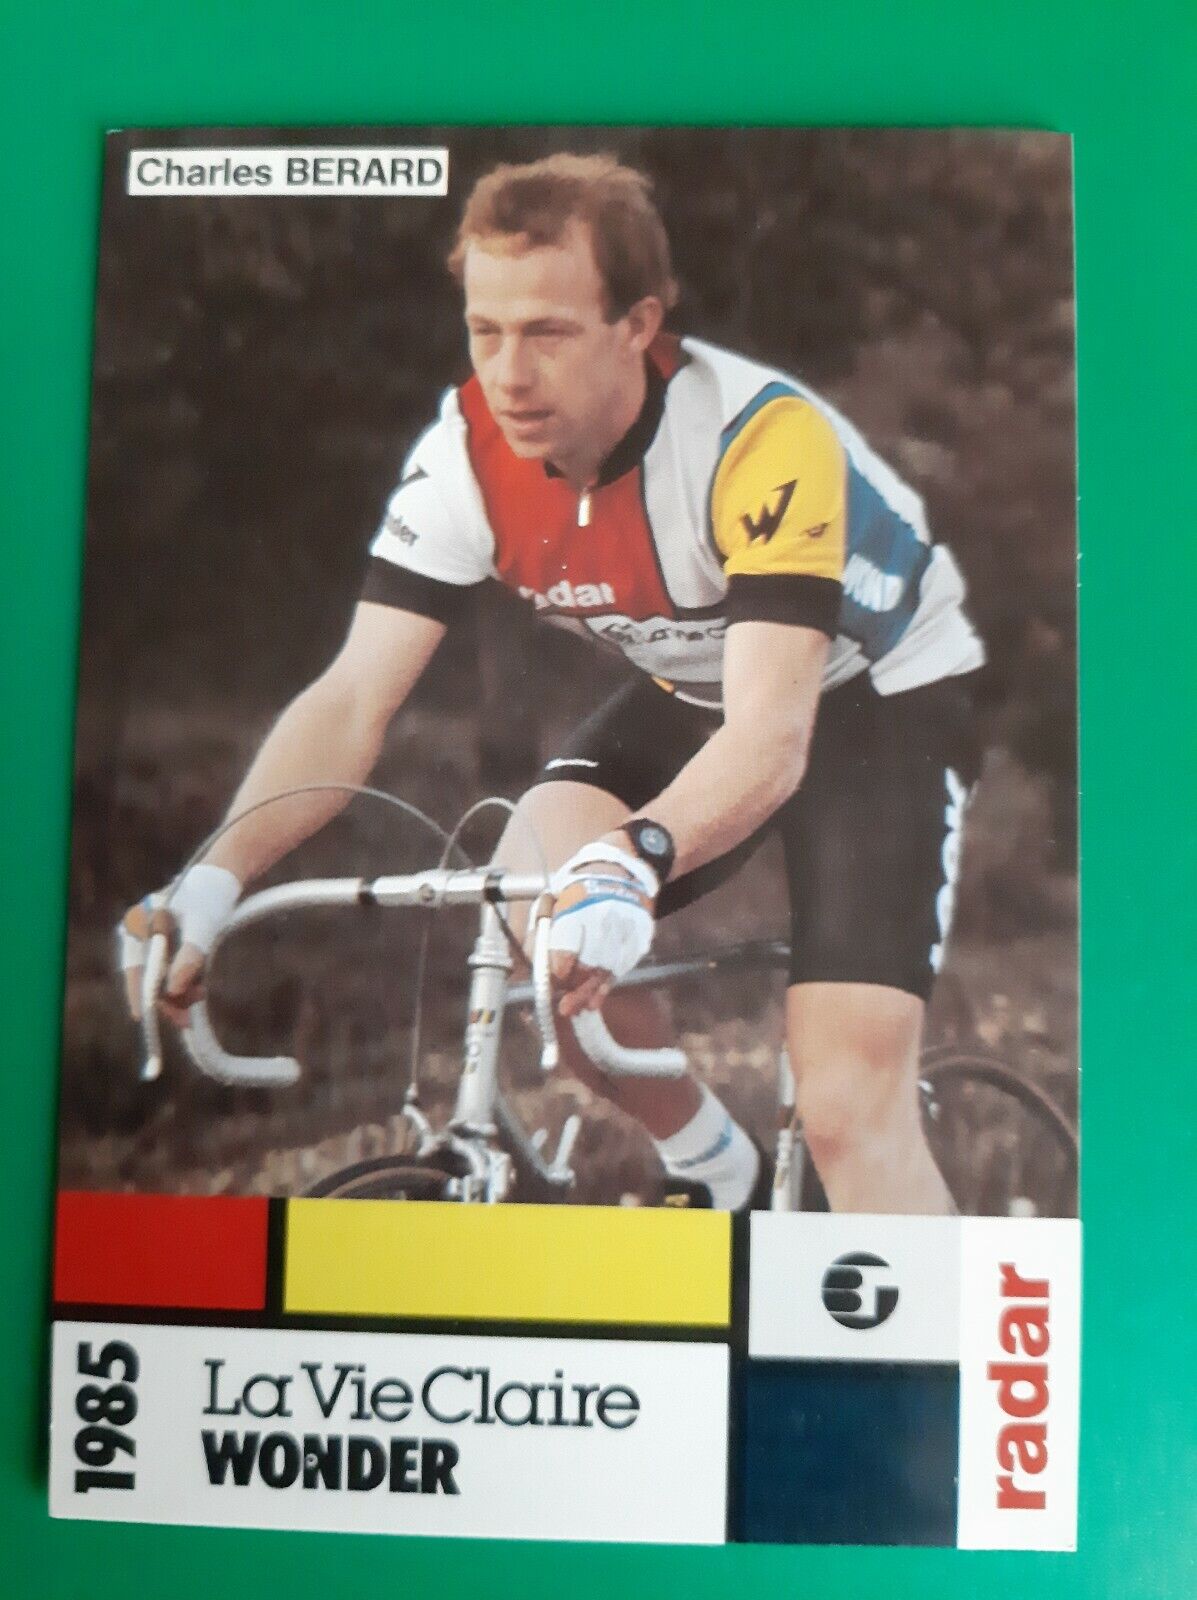 CYCLING cycling card CHARLES BERARD team LA VIE CLAIRE WONDER 1985 